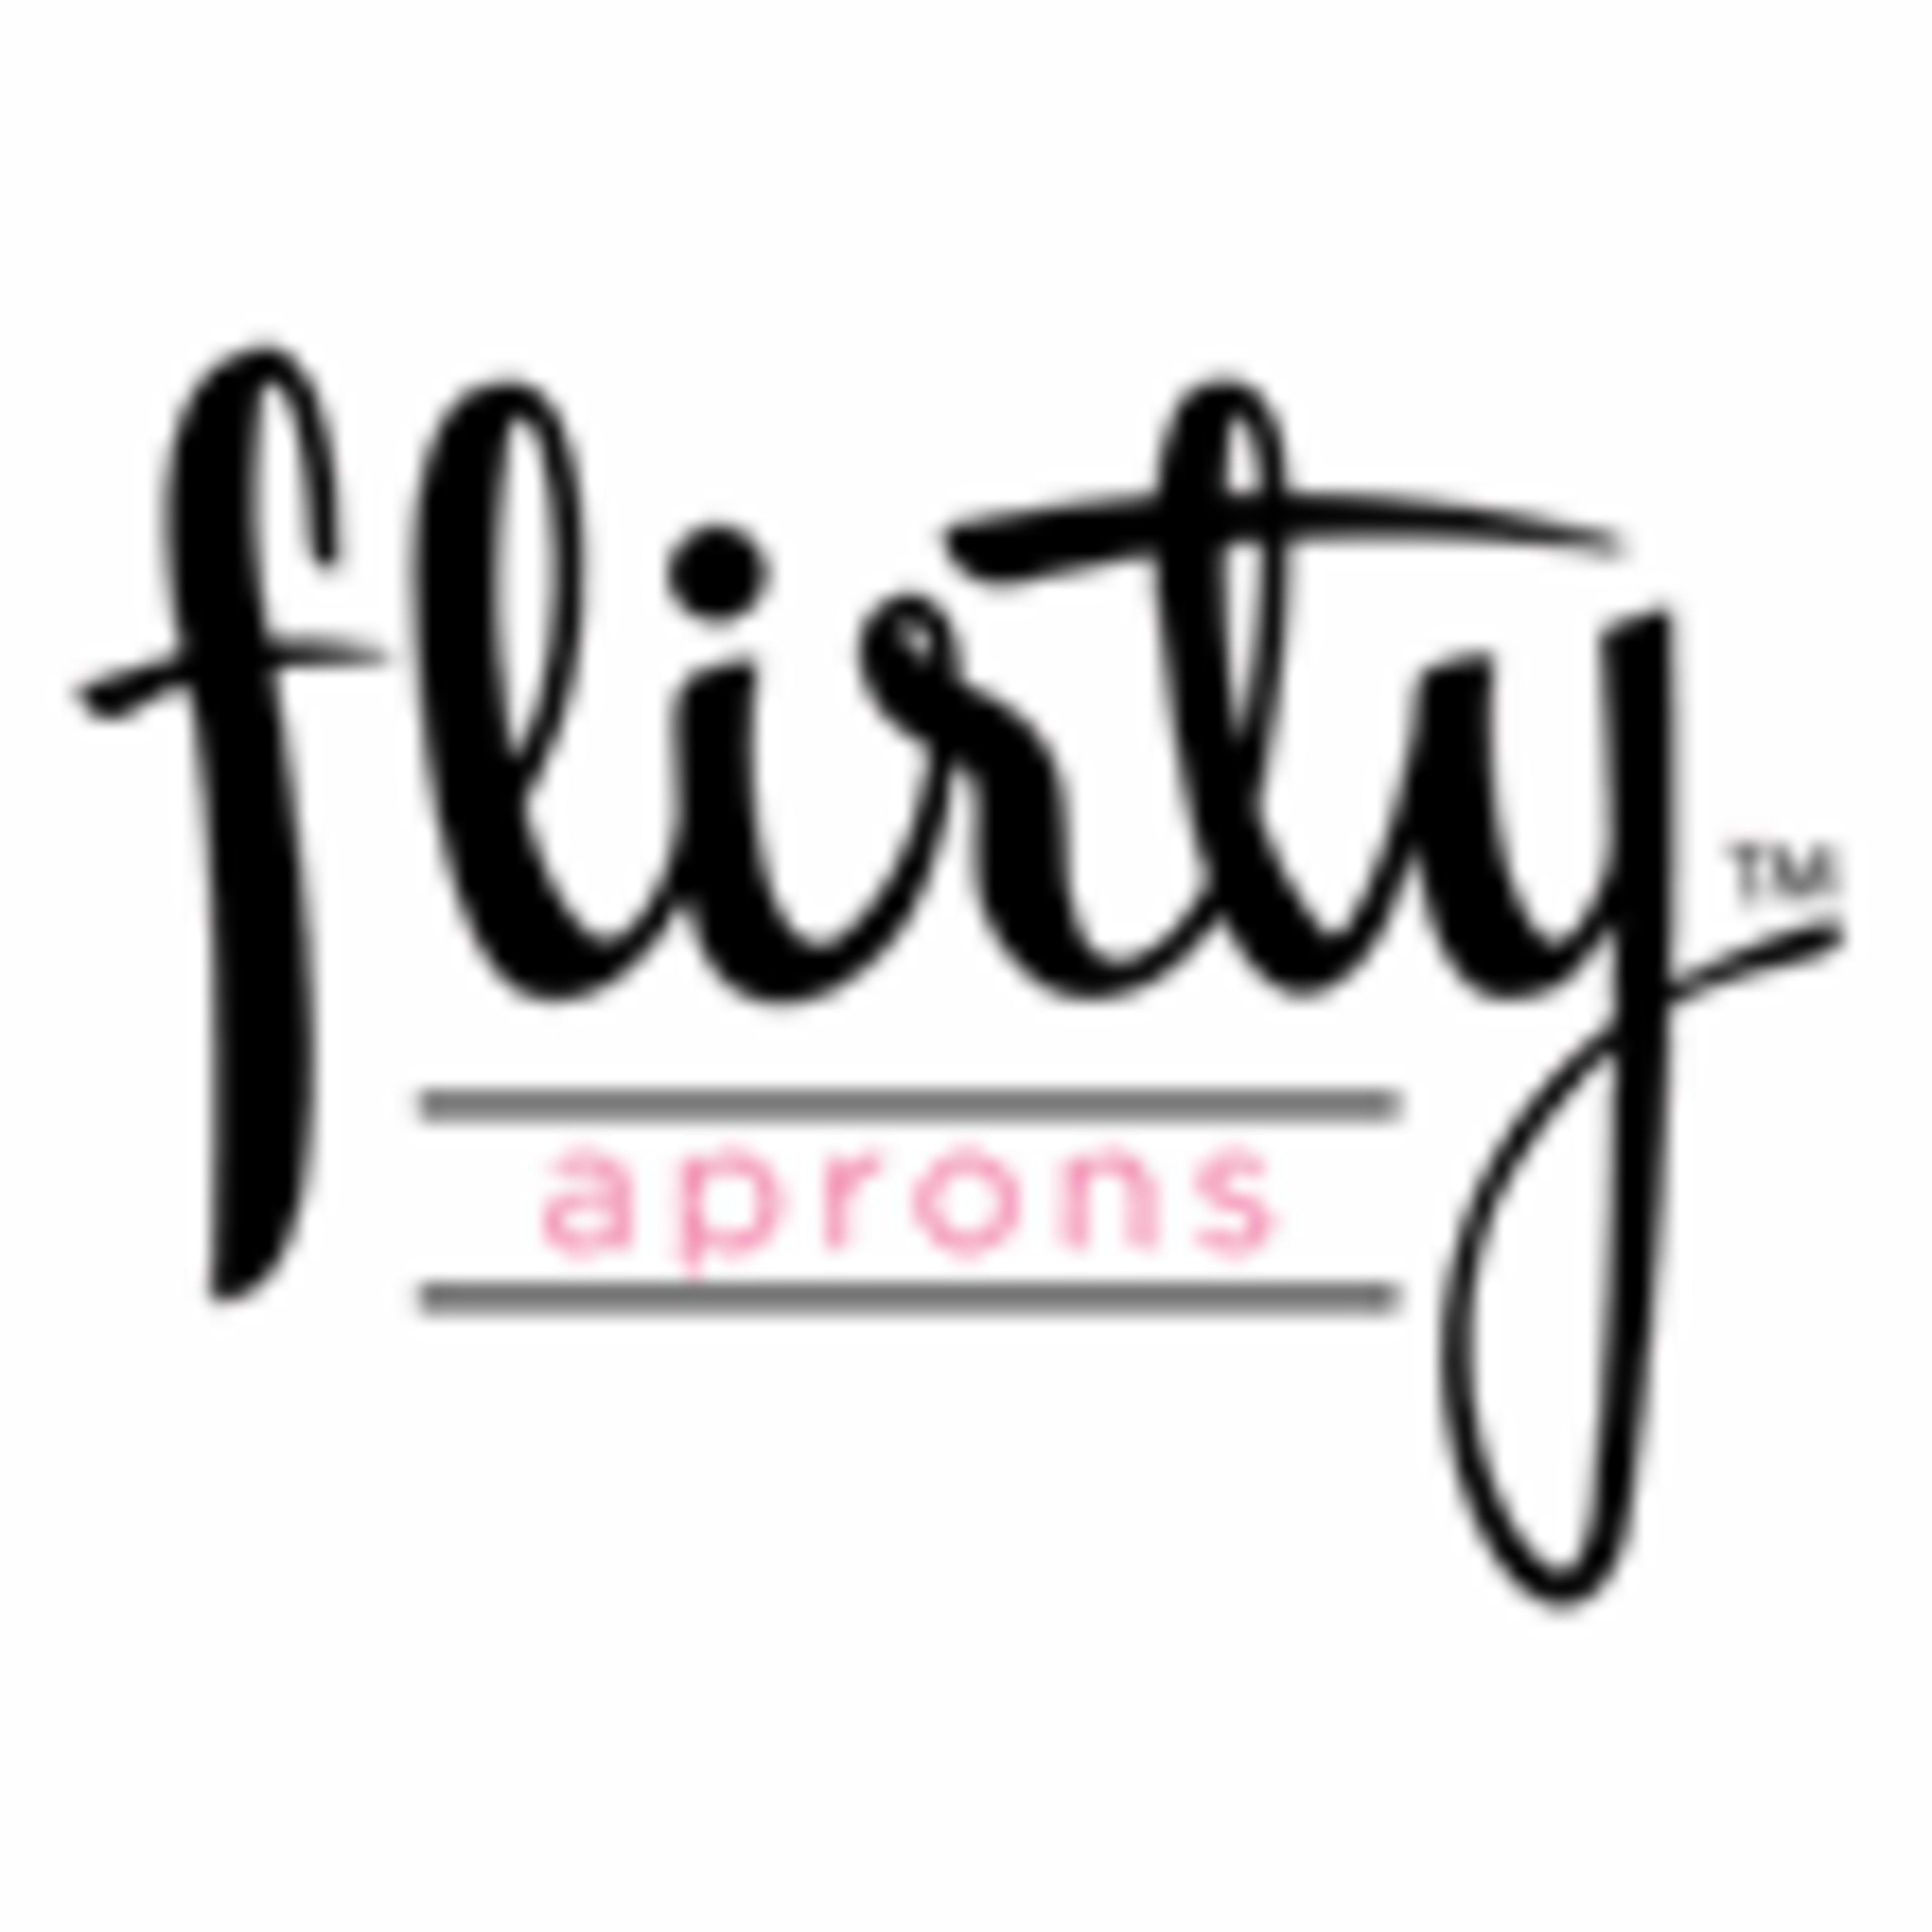 Flirty Aprons Code